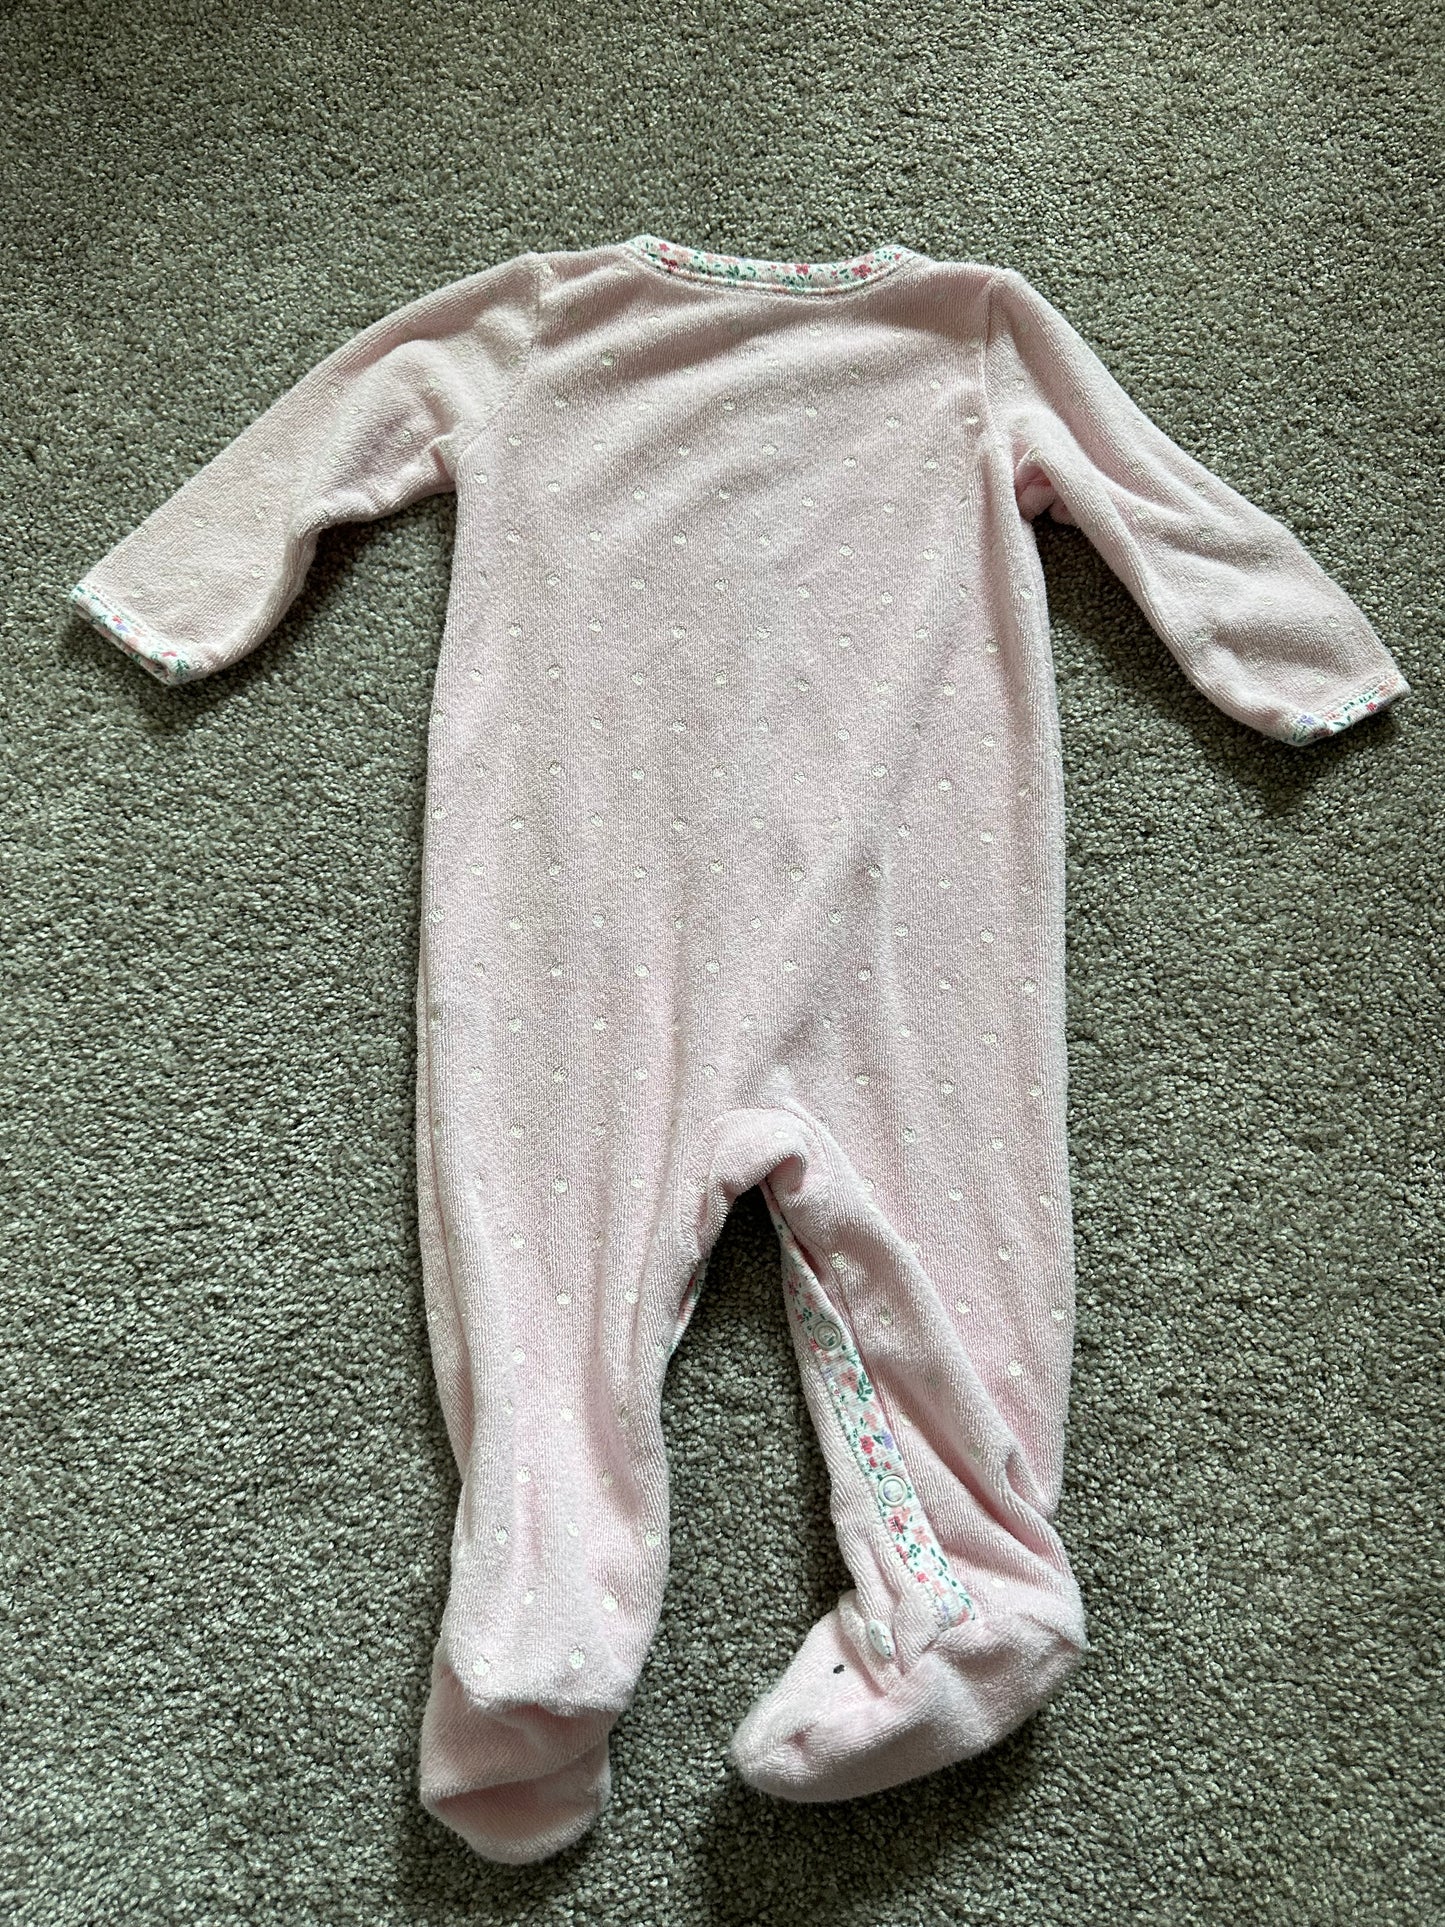 Carter's | sleeper bundle (2) | girl | pink | 6 months | PPU Anderson